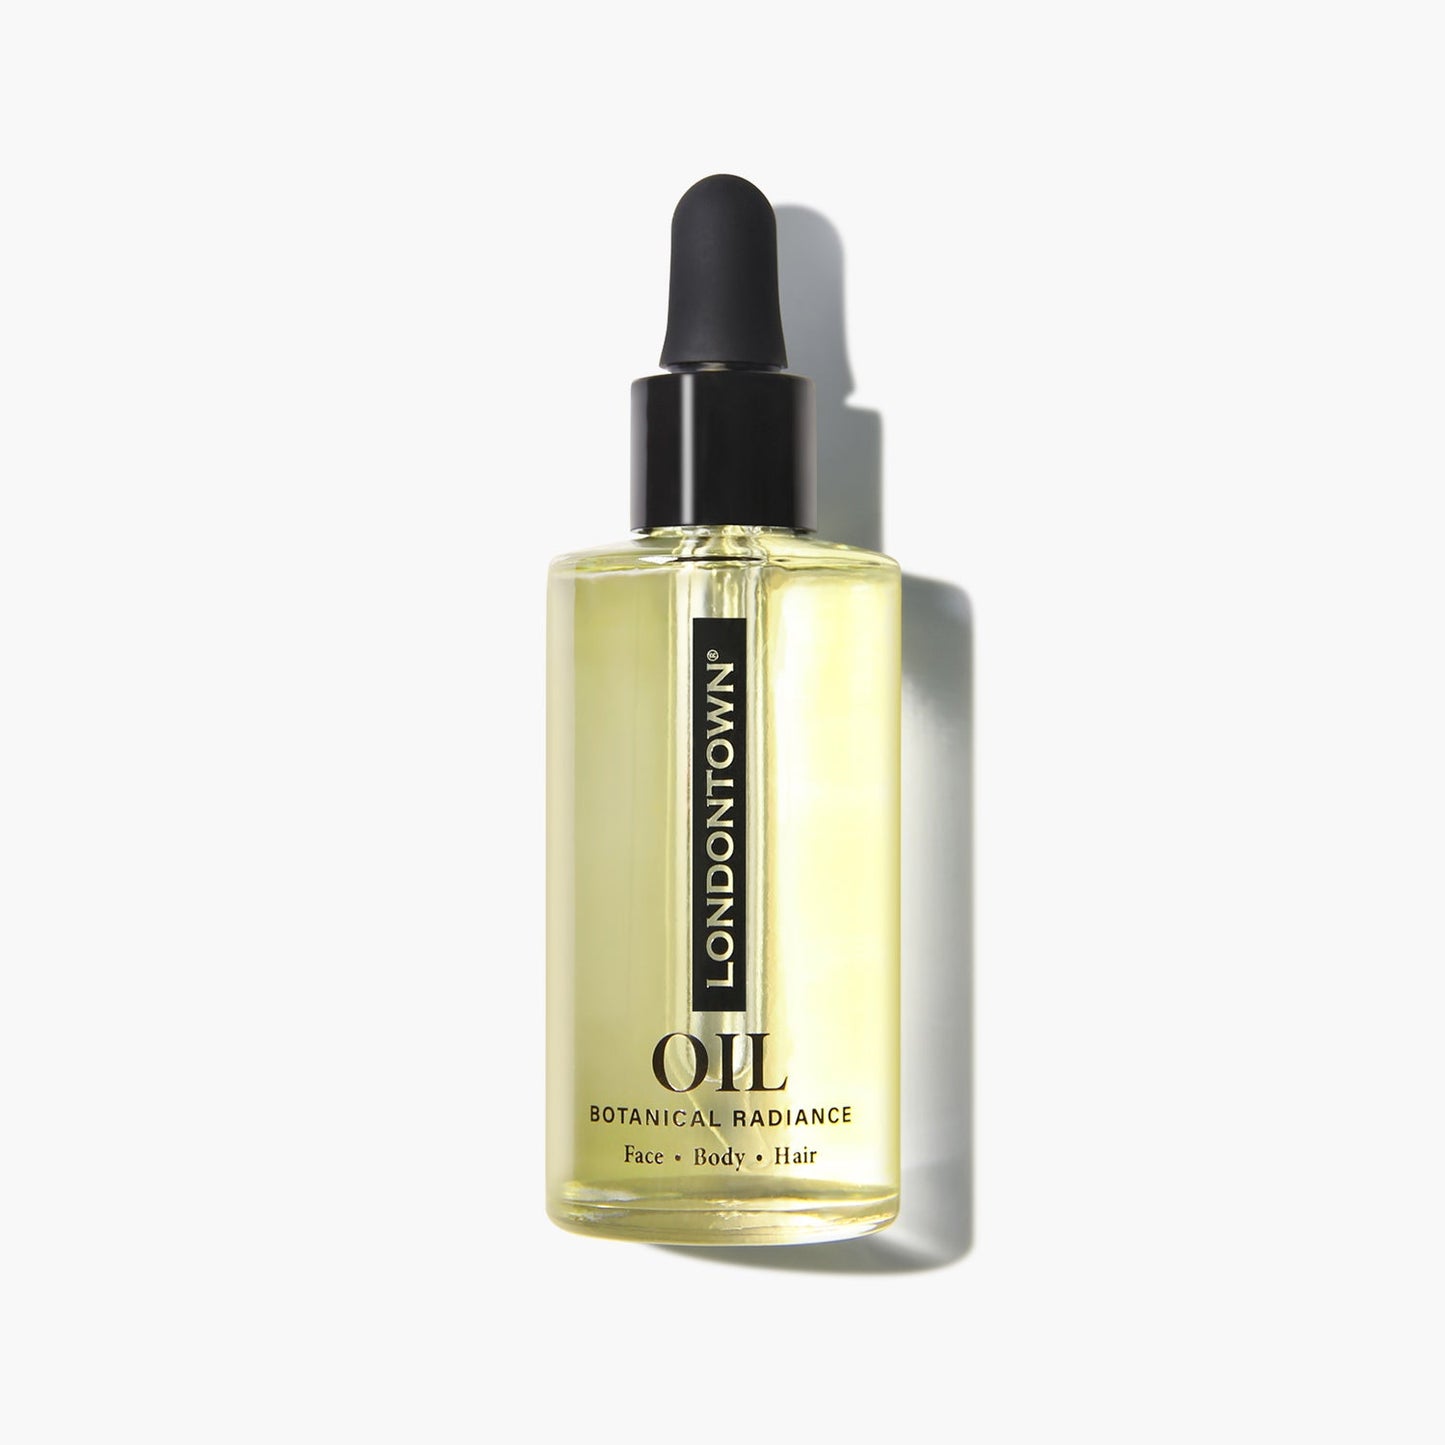 Botanical Radiance Oil | Skin Care